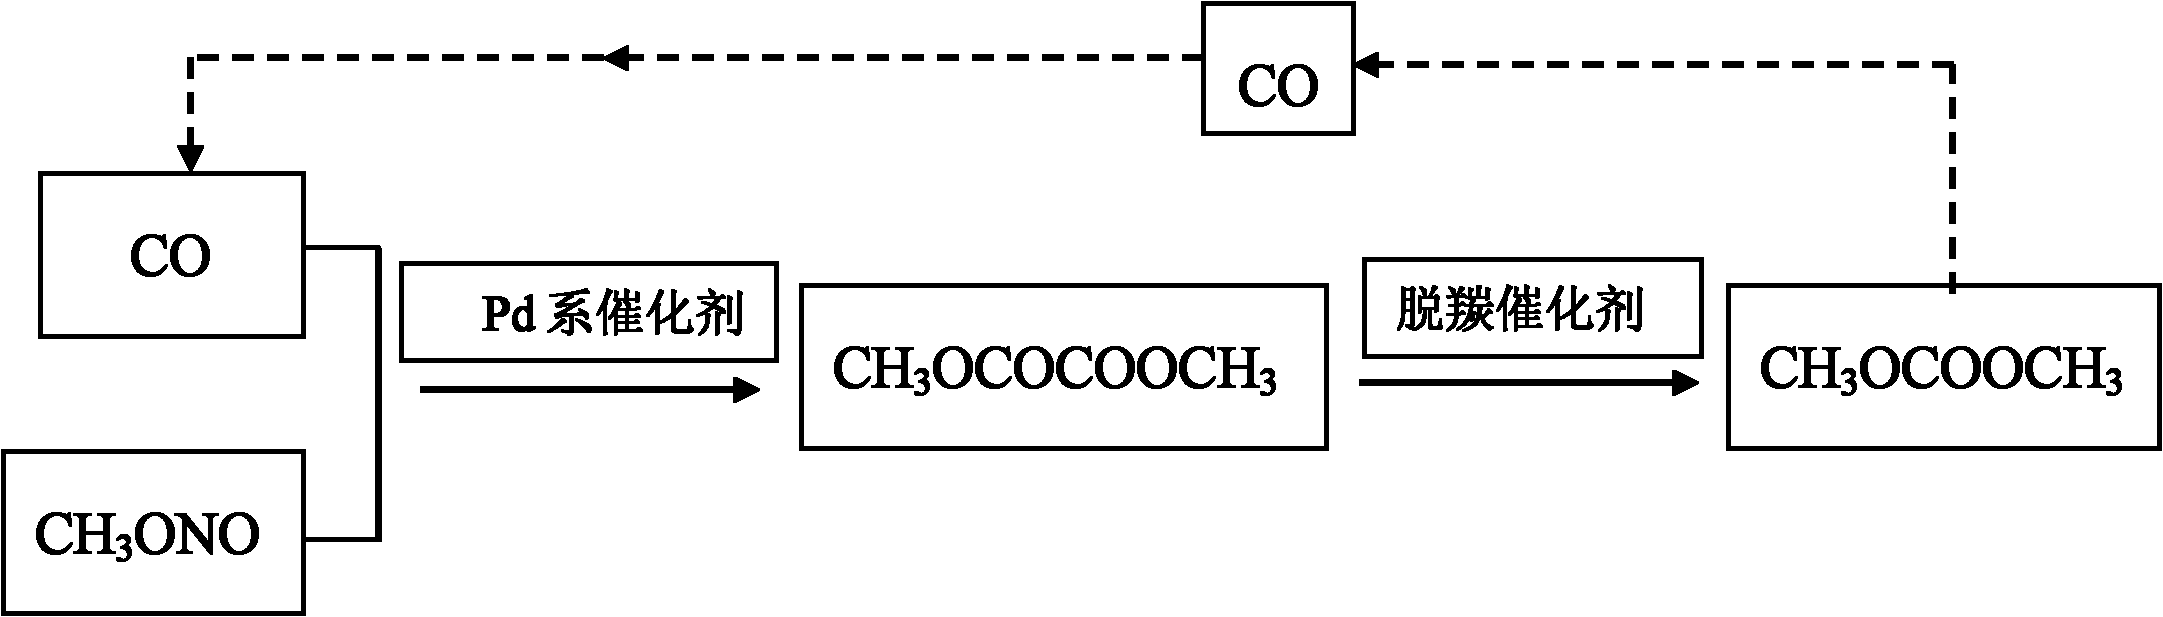 Method for indirectly synthesizing dimethyl carbonate by CO gas phase oxidative coupling and decarbonylation